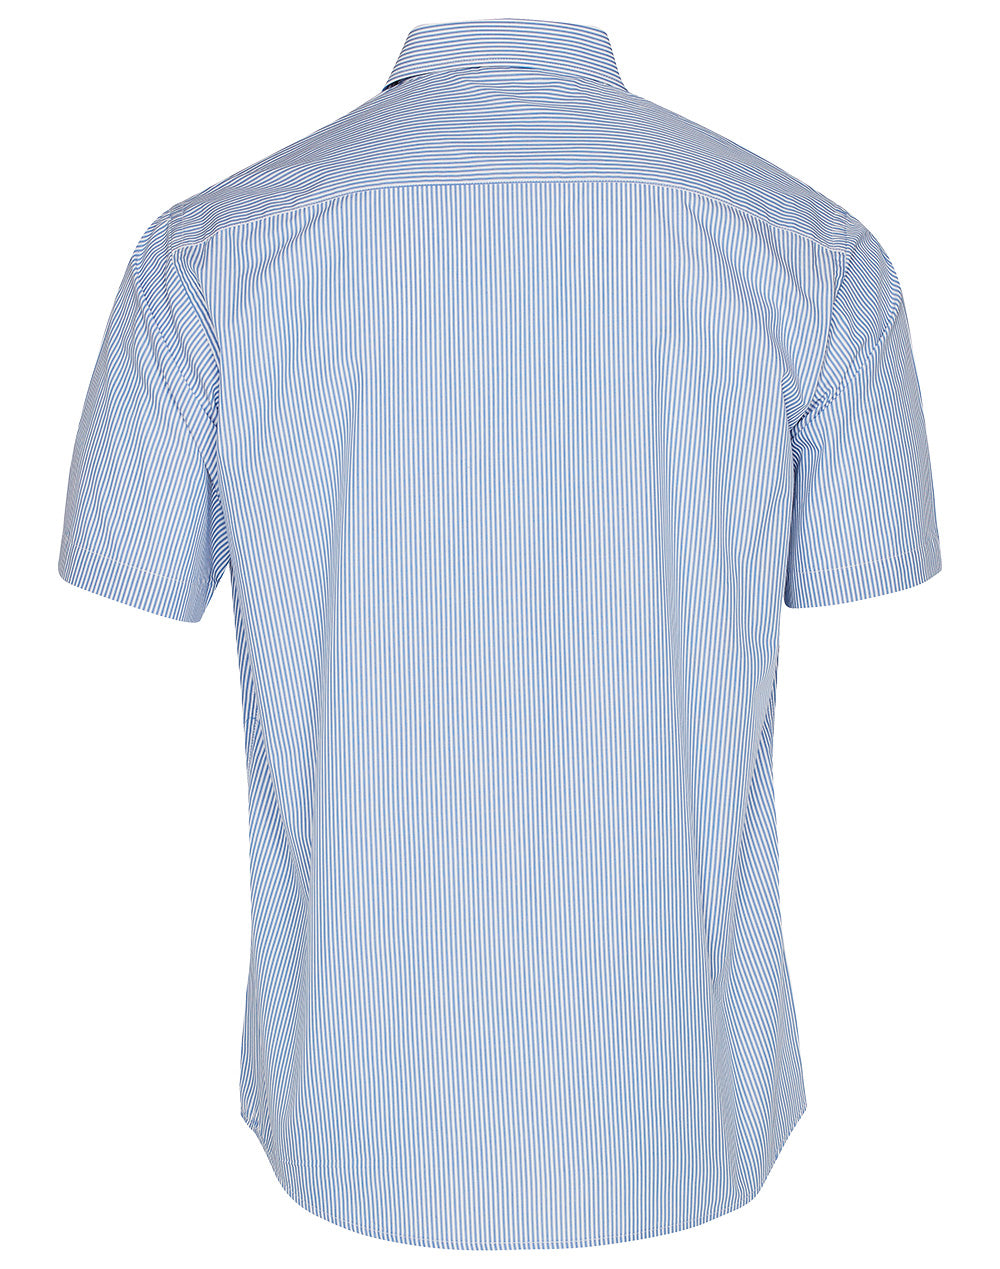 Benchmark M7231 Men's Balance Stripe Short Sleeve Shirt